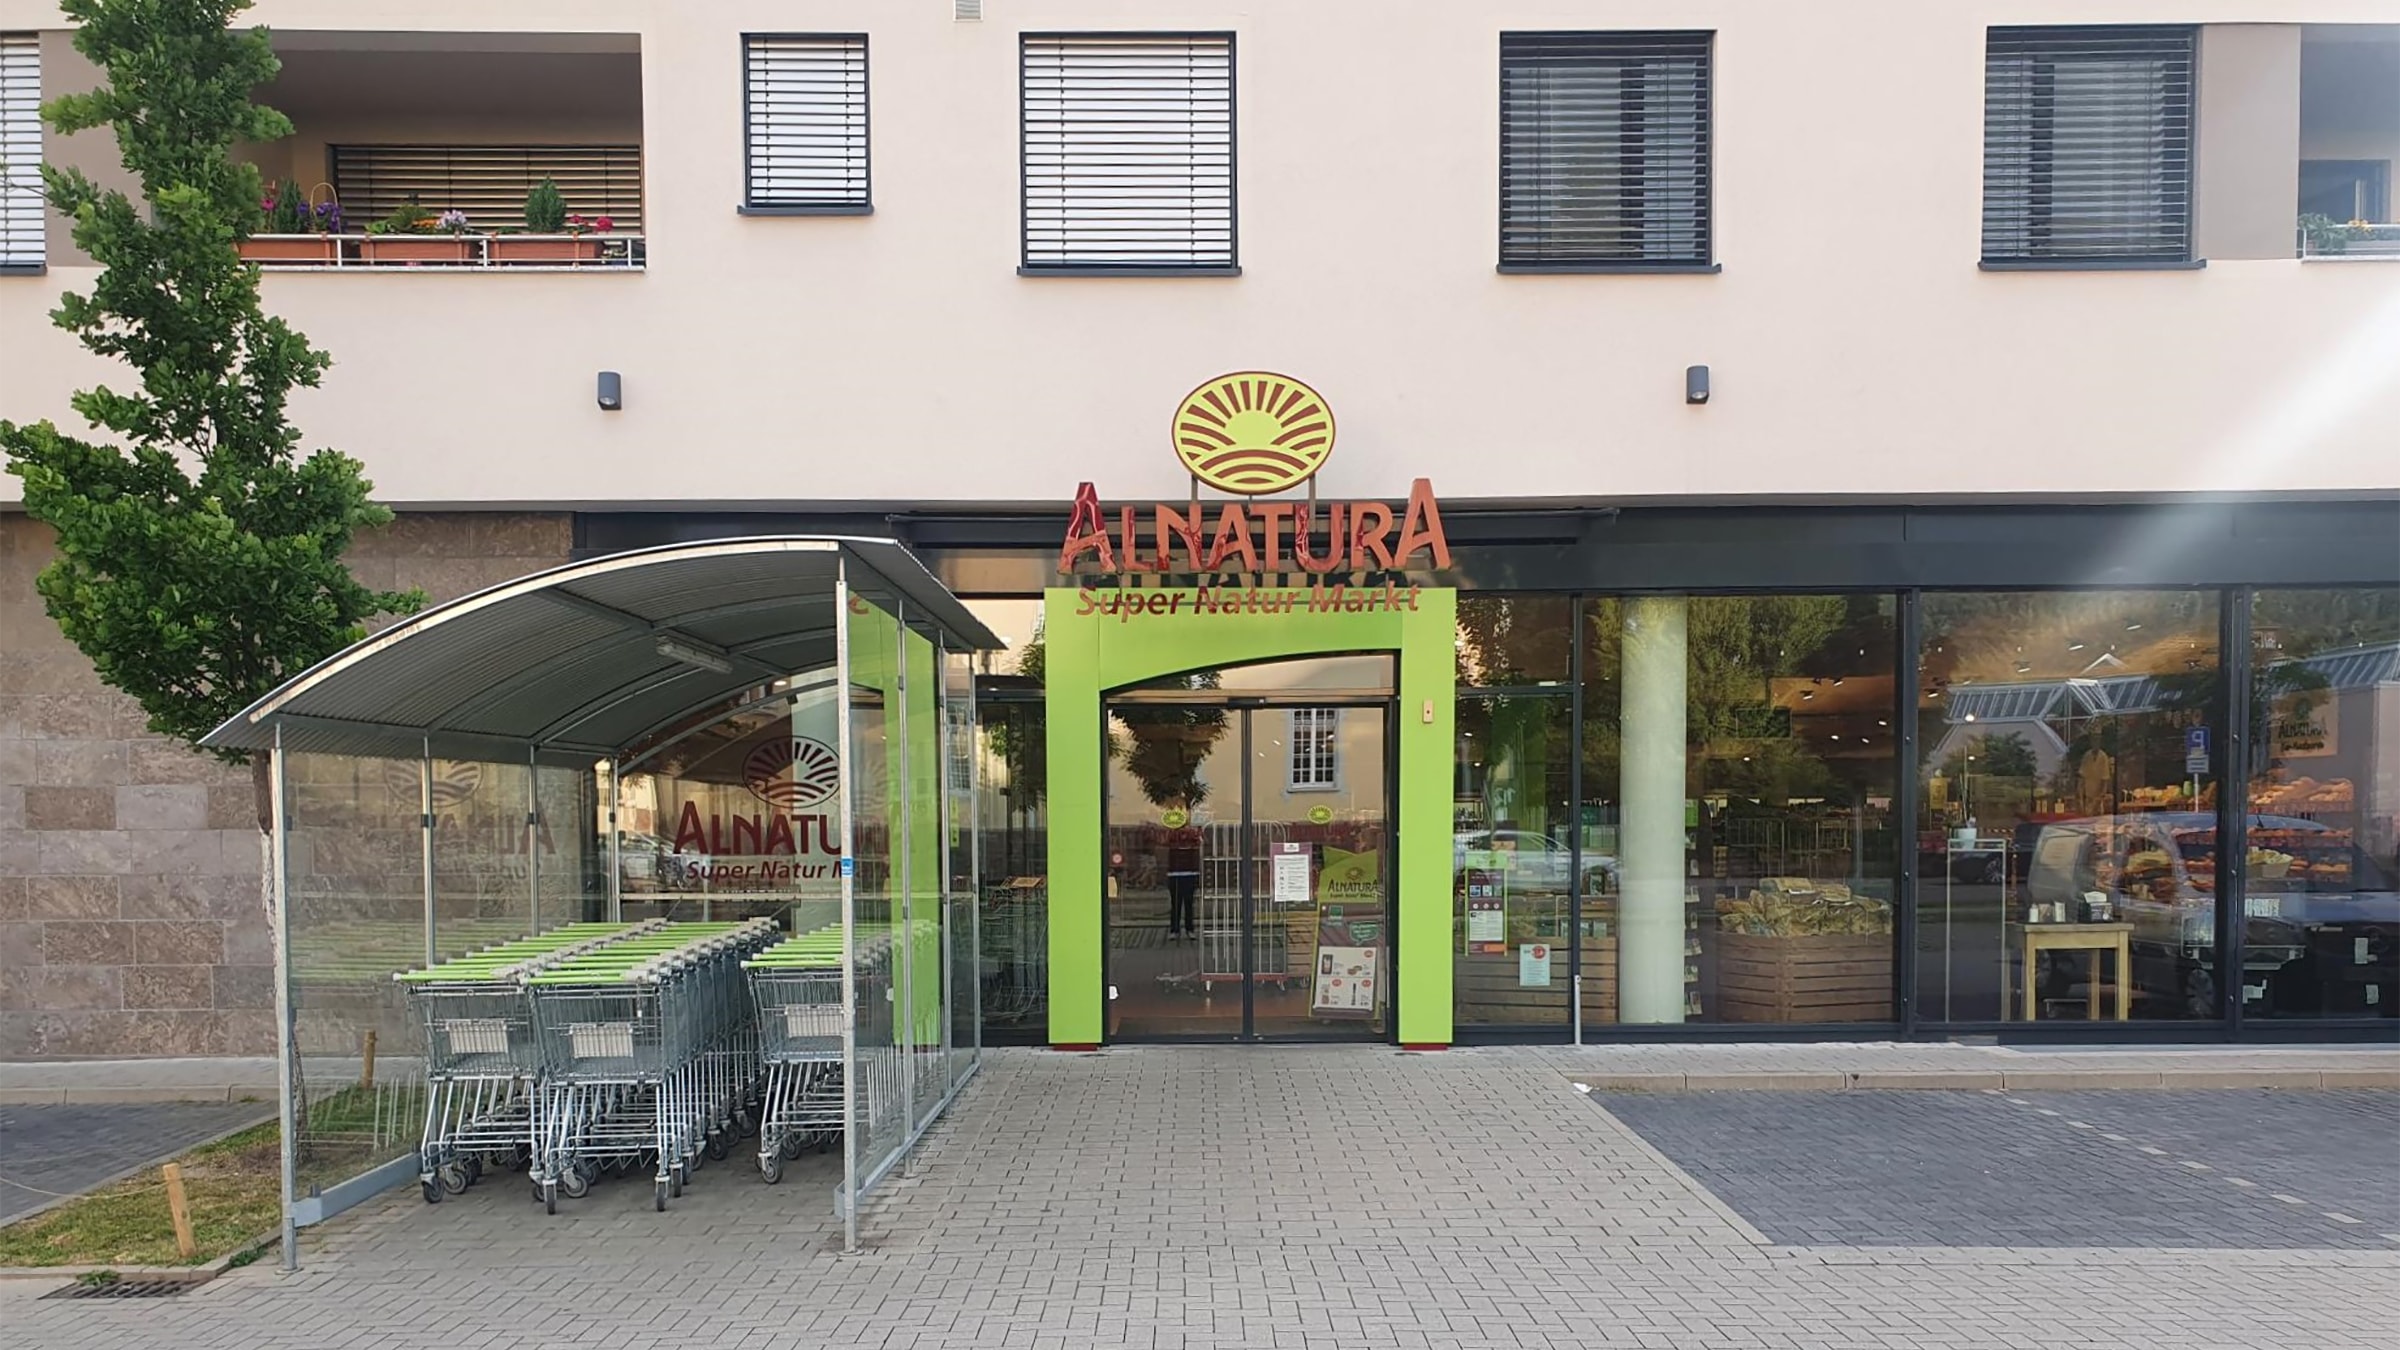 Ihr Alnatura Super Natur Markt in Ettlingen